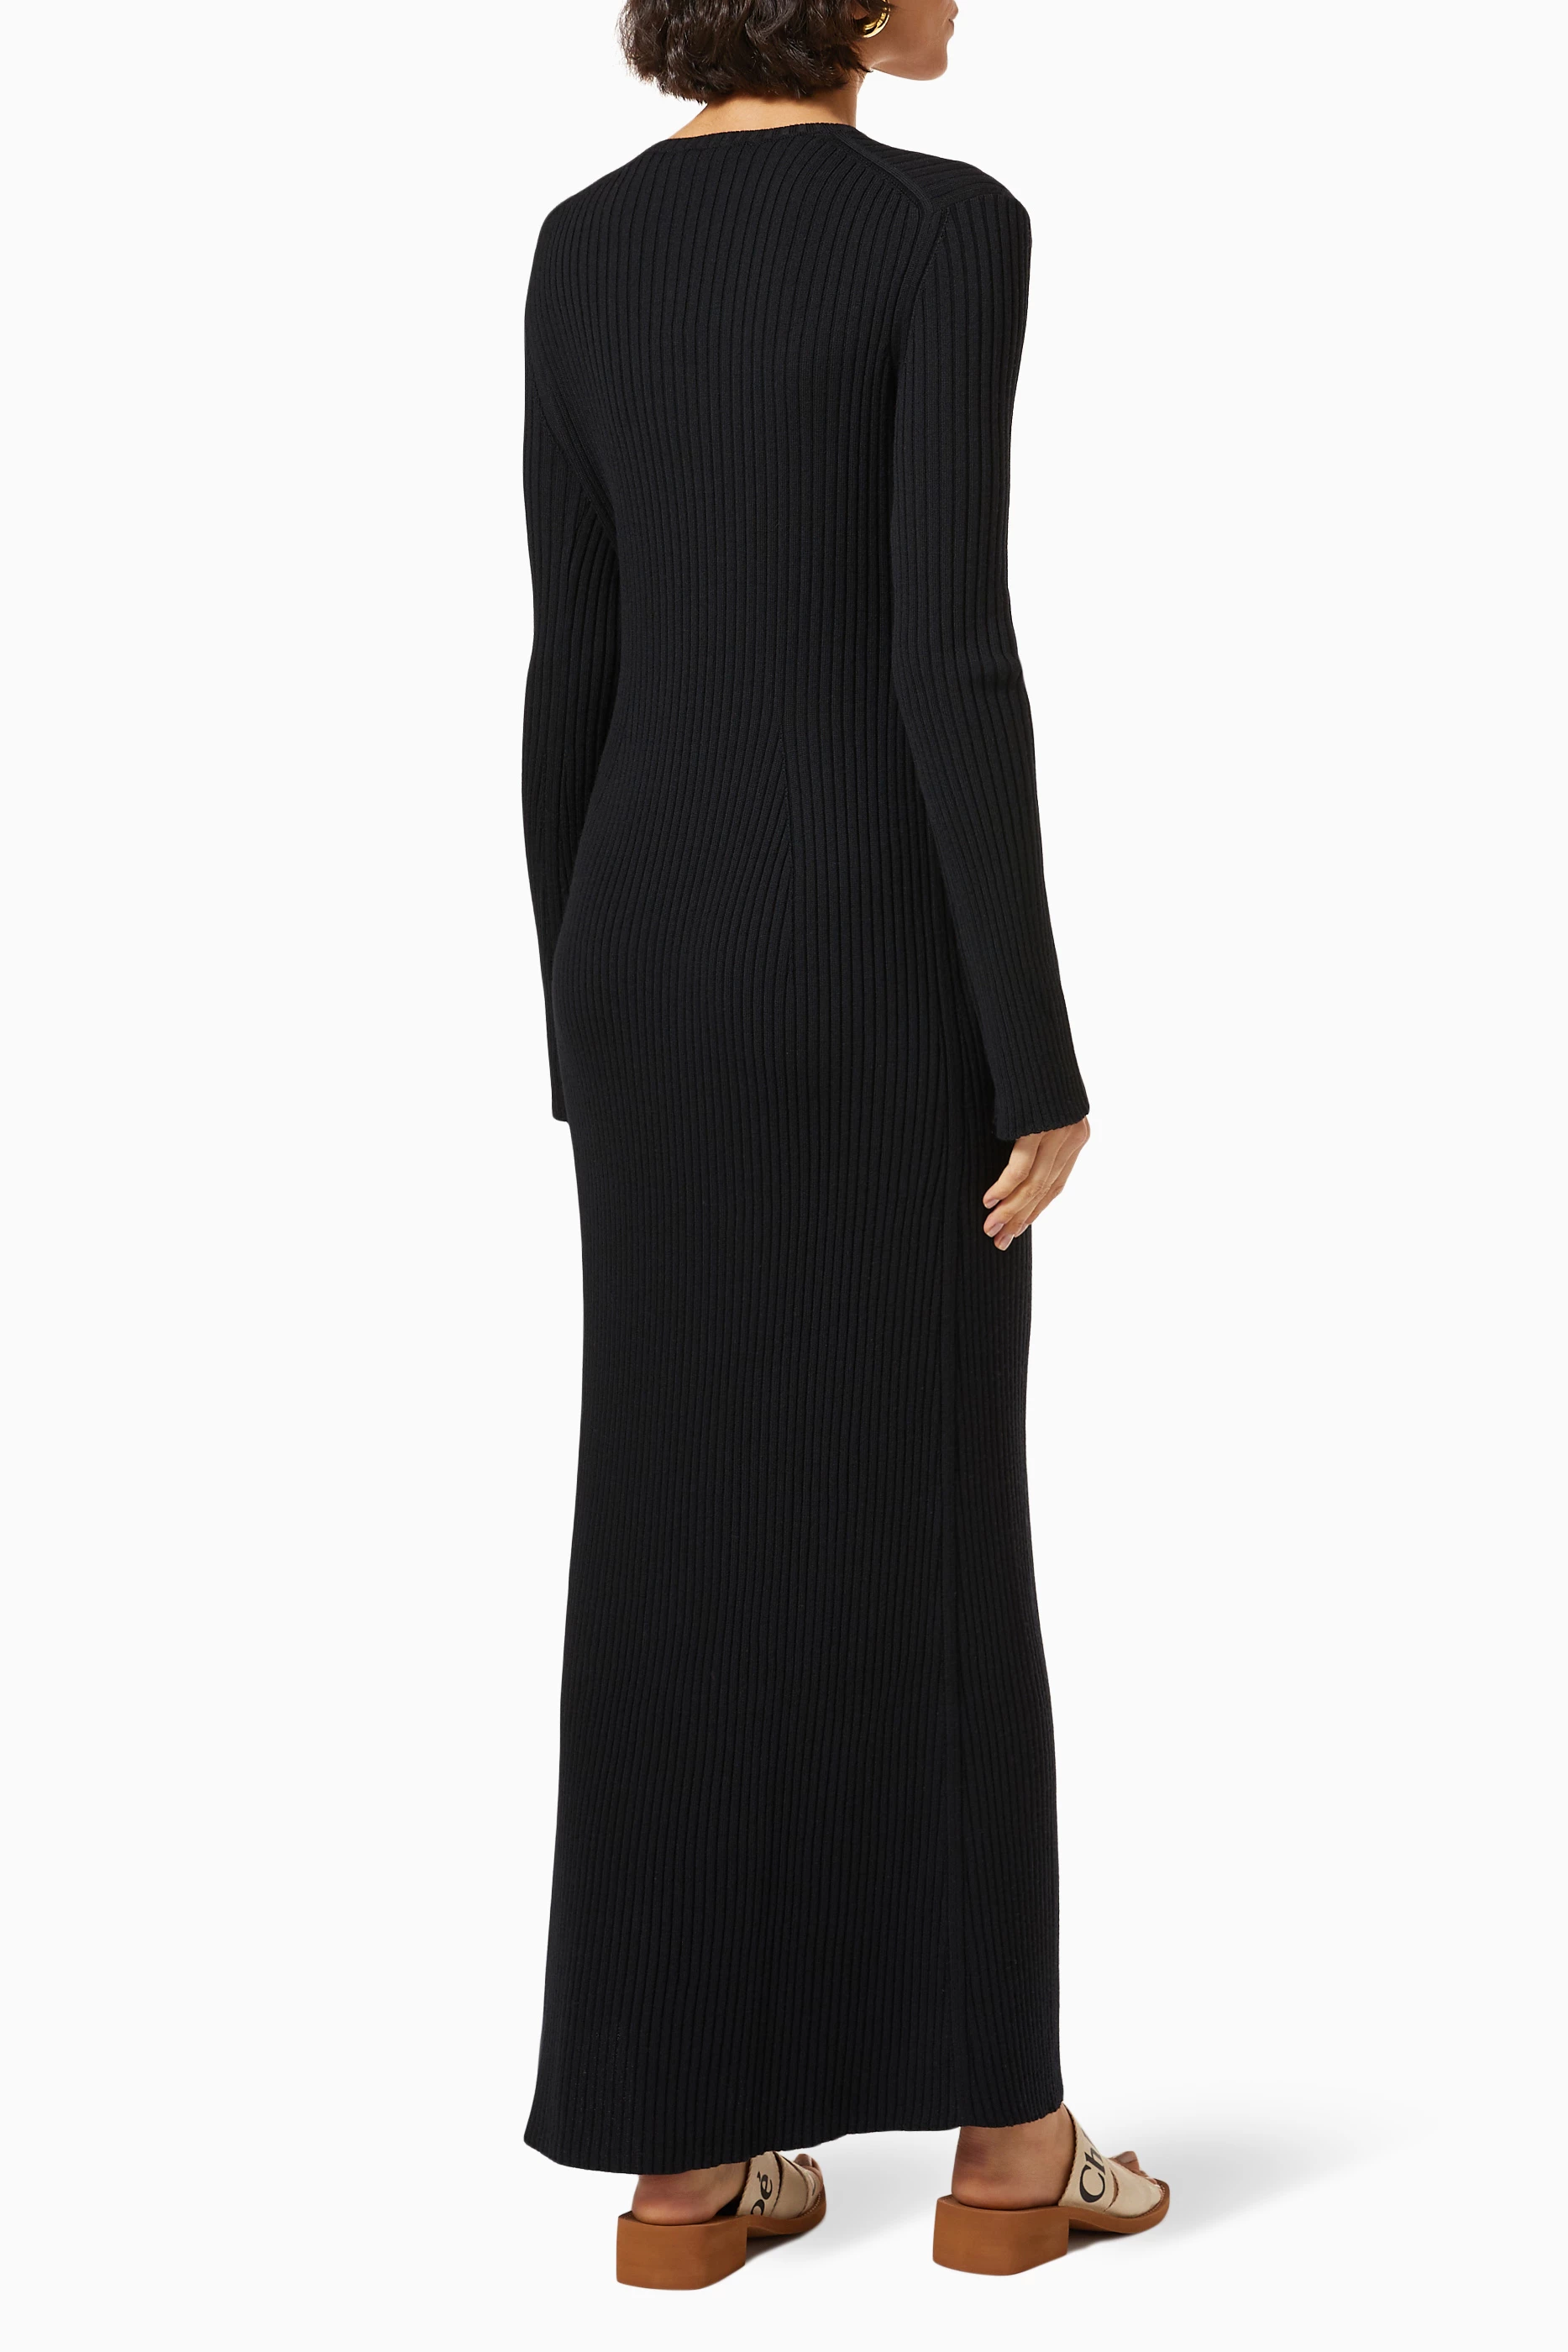 Chloe Merino Wool Fitted Dress - Black - wool